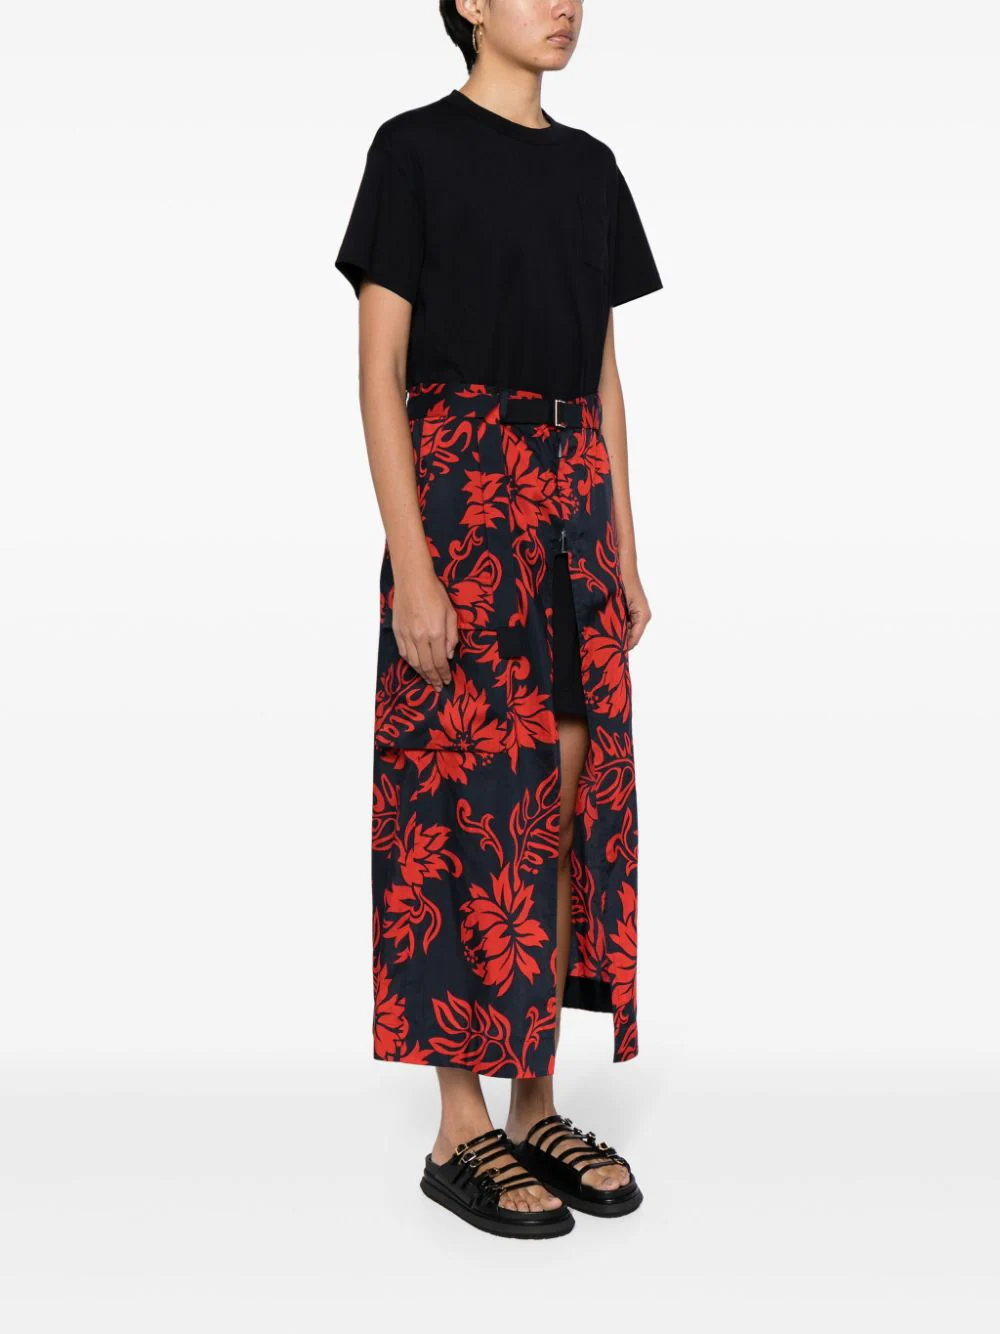 sacai-Floral-Print-Cotton-Jersey-Dress-Red-3